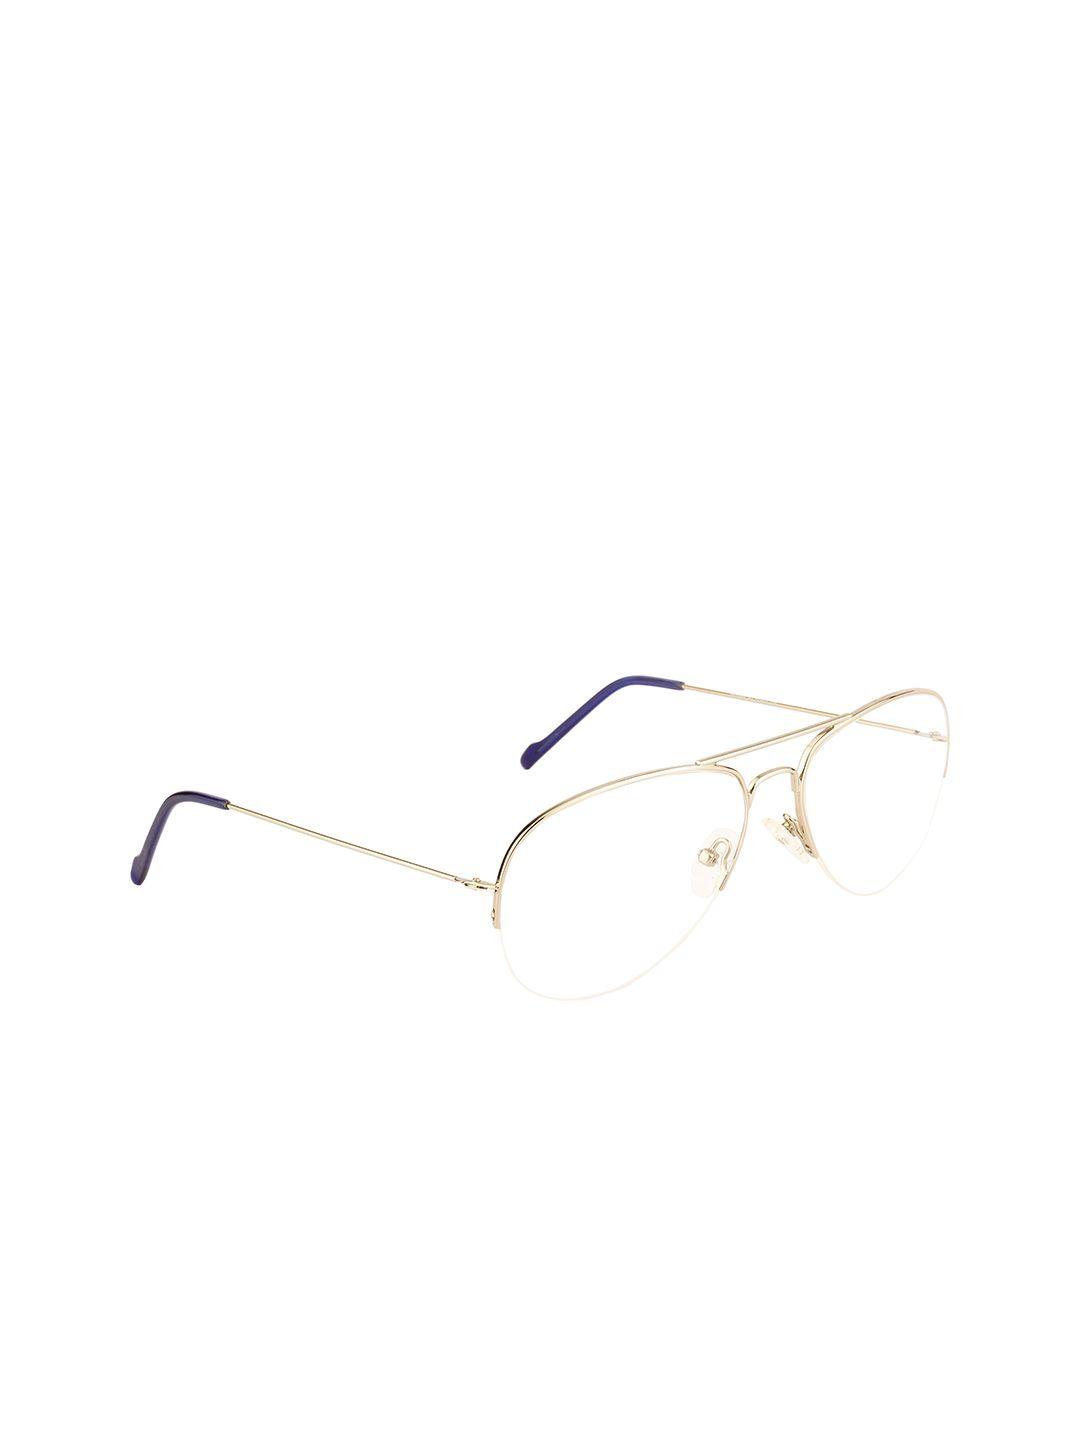 ted smith unisex silver aviator frames eyeglasses